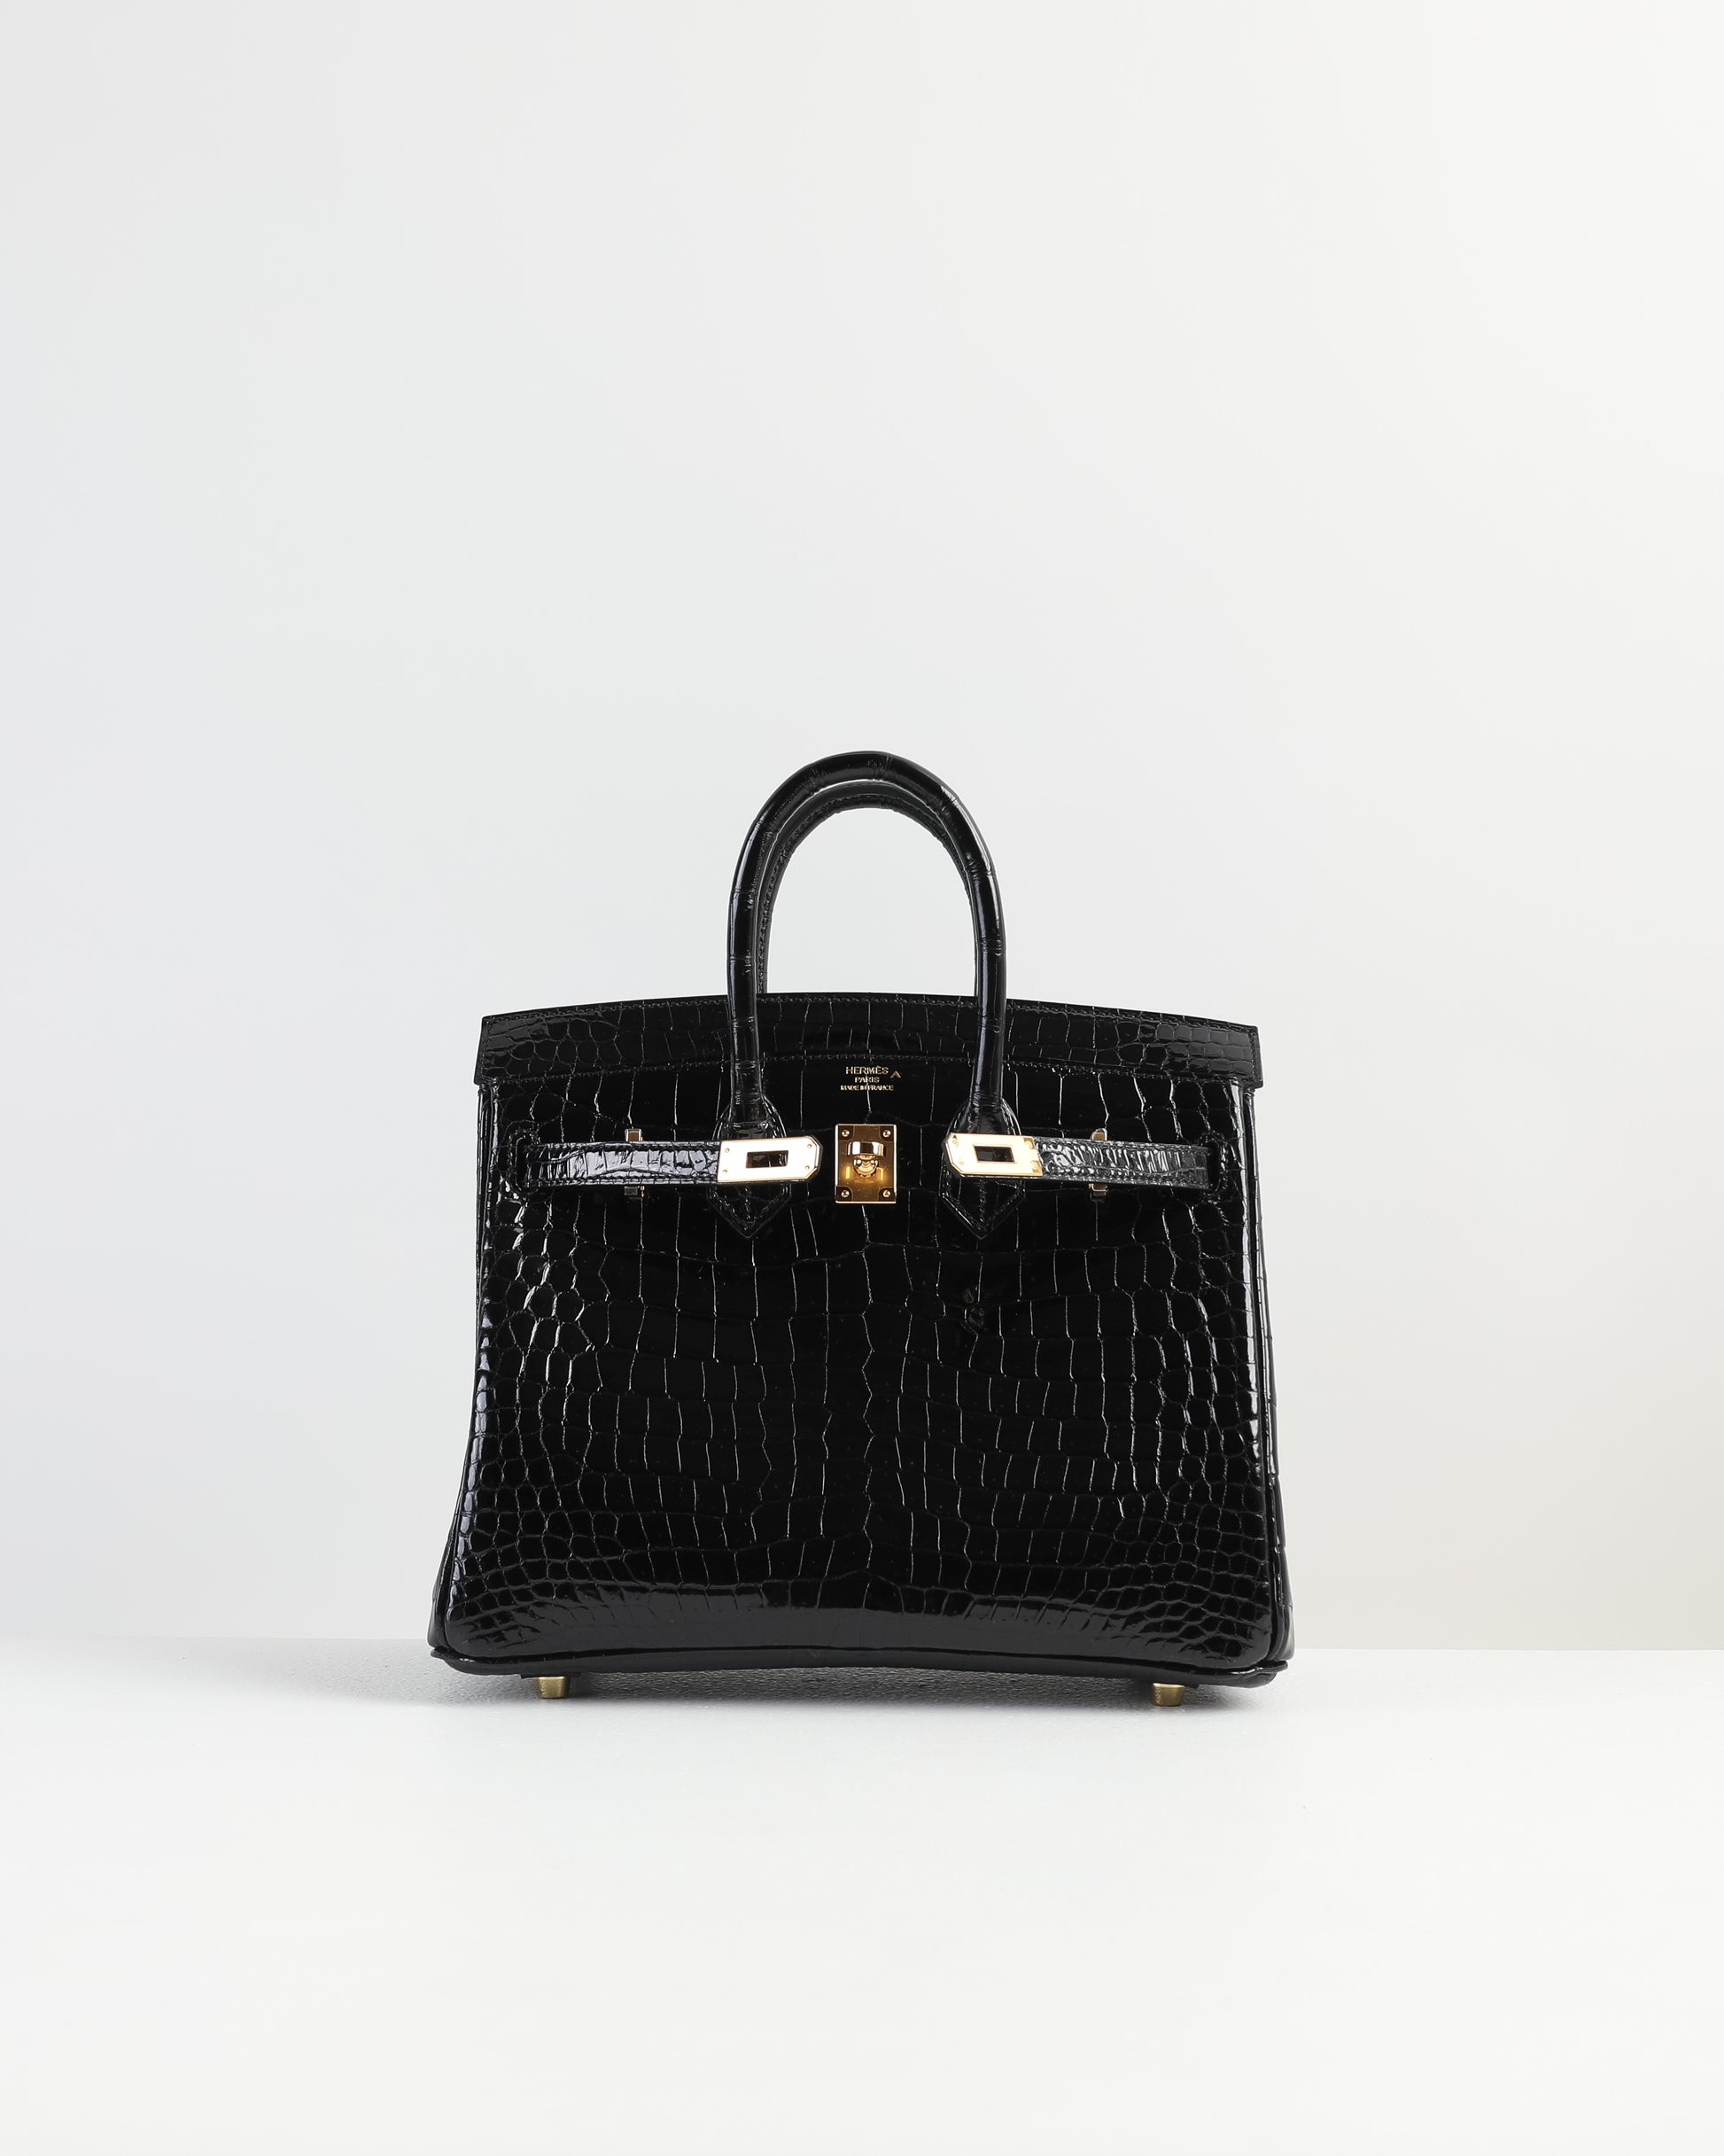 🗝️ Hermès 25cm Birkin Black Shiny Porosus Crocodile Gold